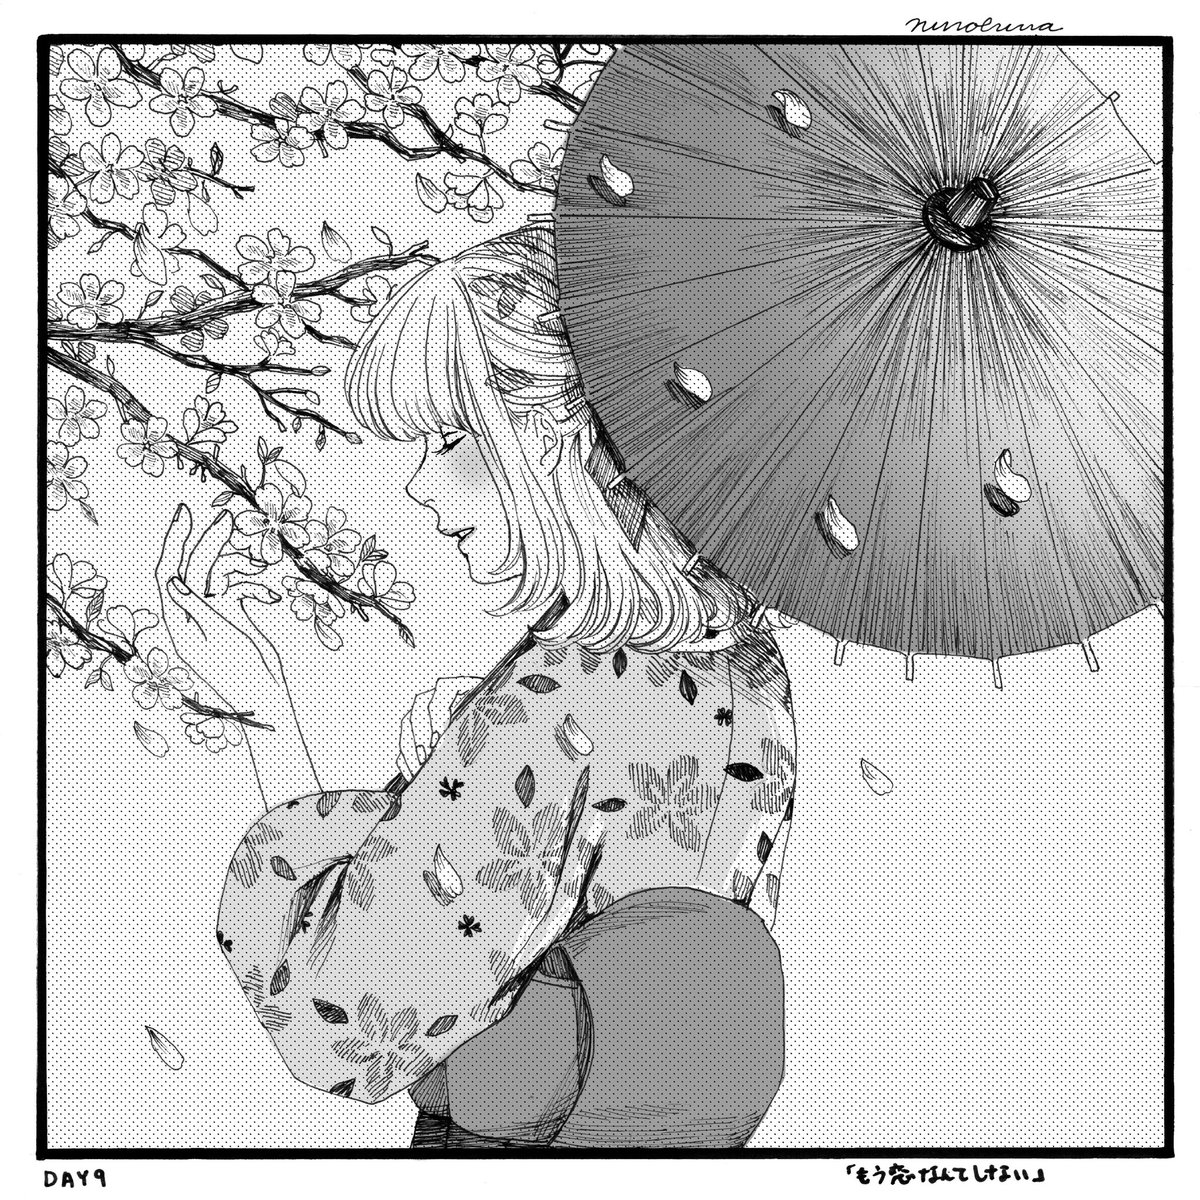 DAY 9 「もう恋なんてしない」 
#inktober #inktober2019 #漫画 